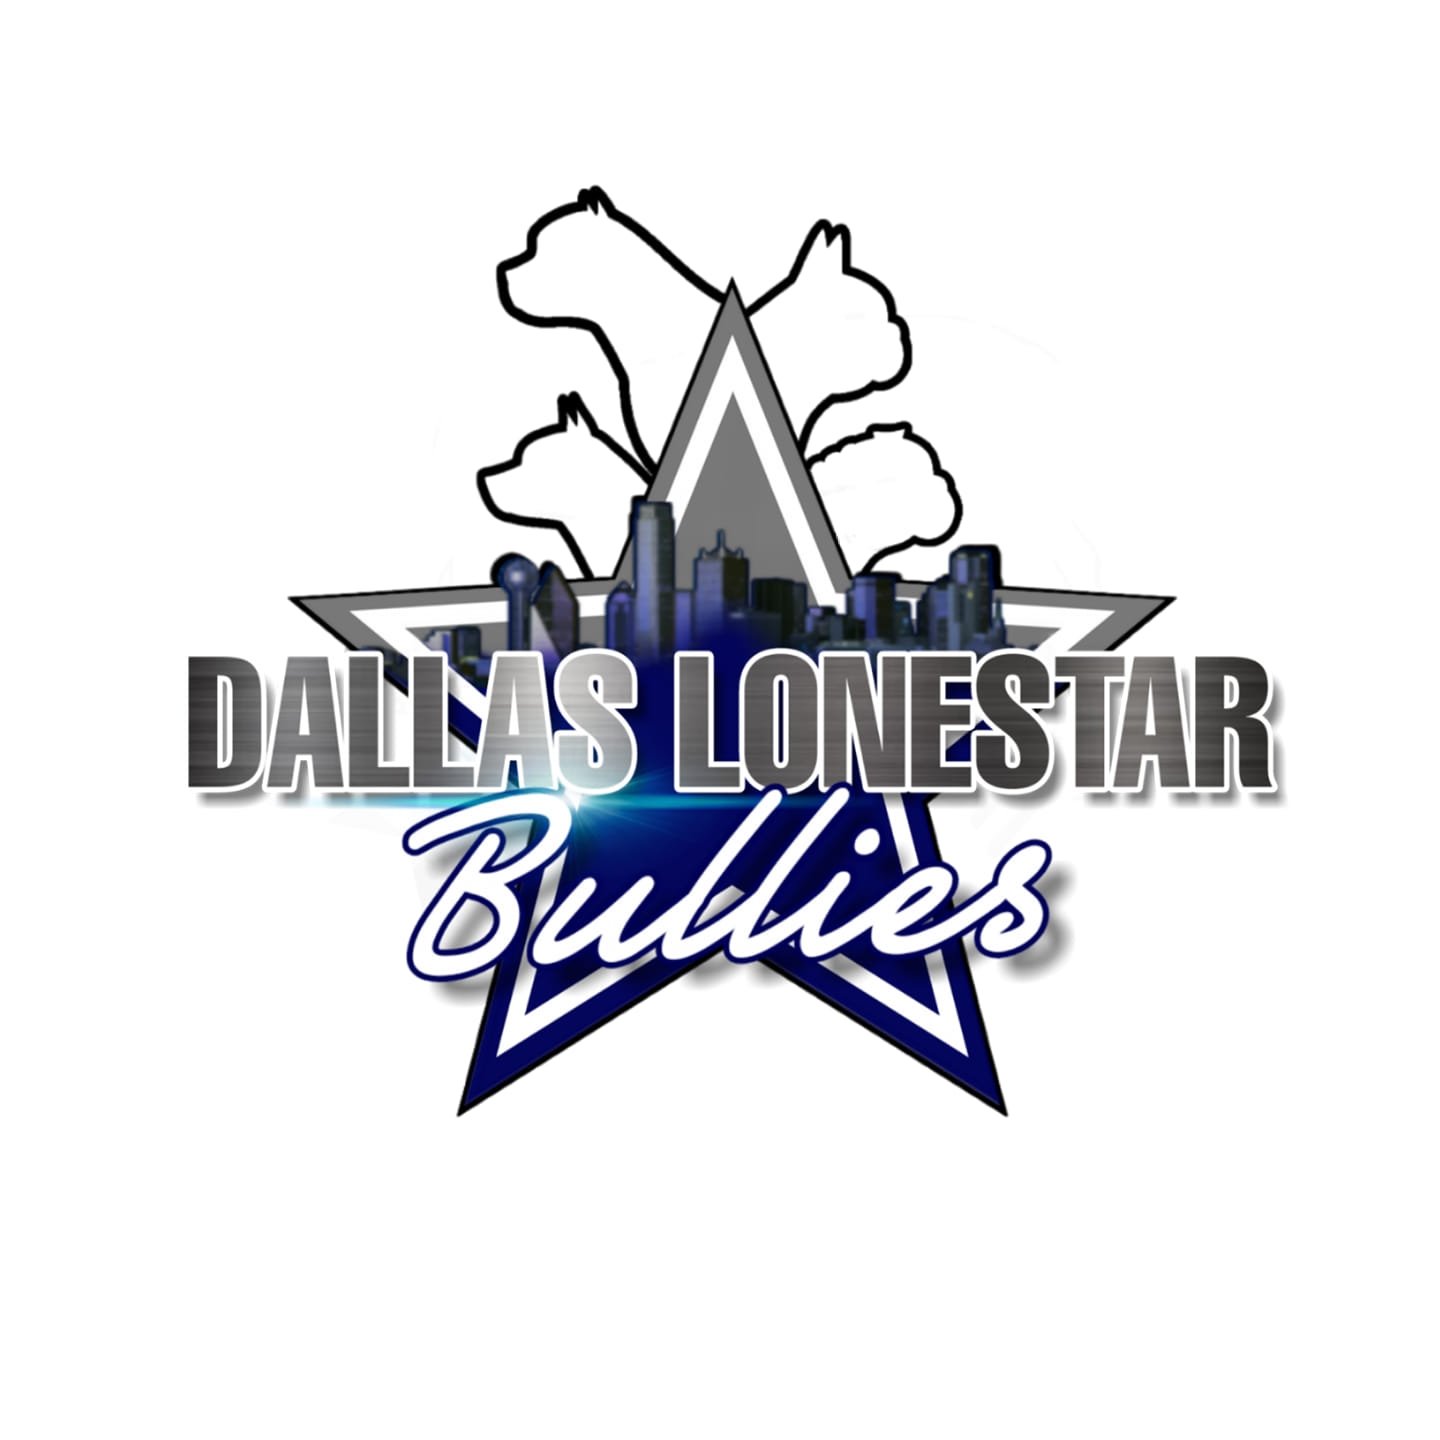 Dallas Lone Star Bullies